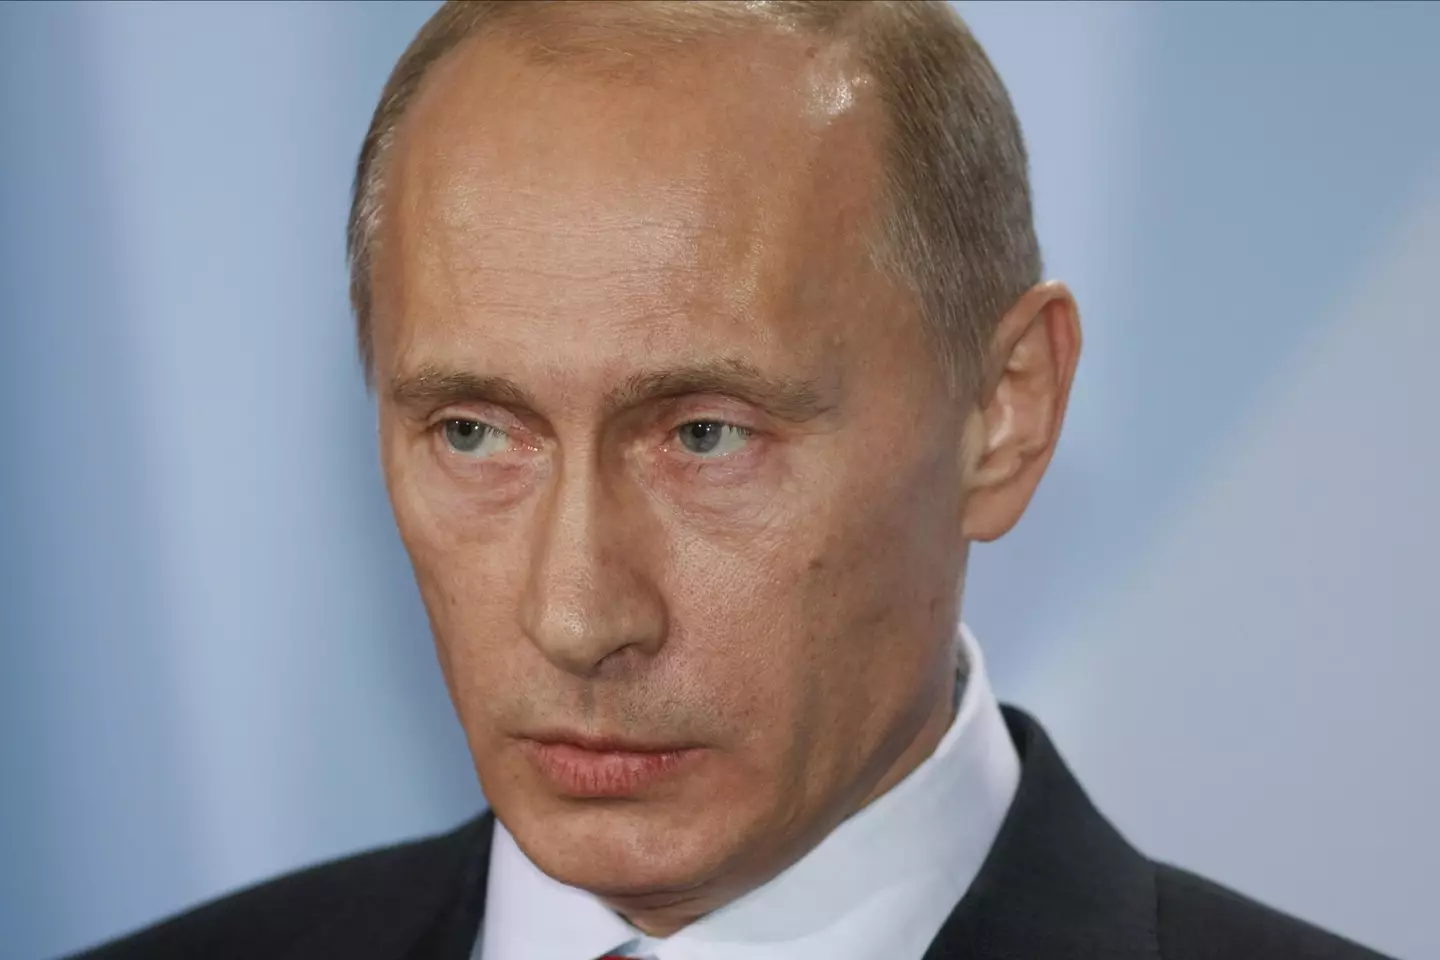 Russian President Vladimir Putin implemented martial law in four regions in Ukraine.